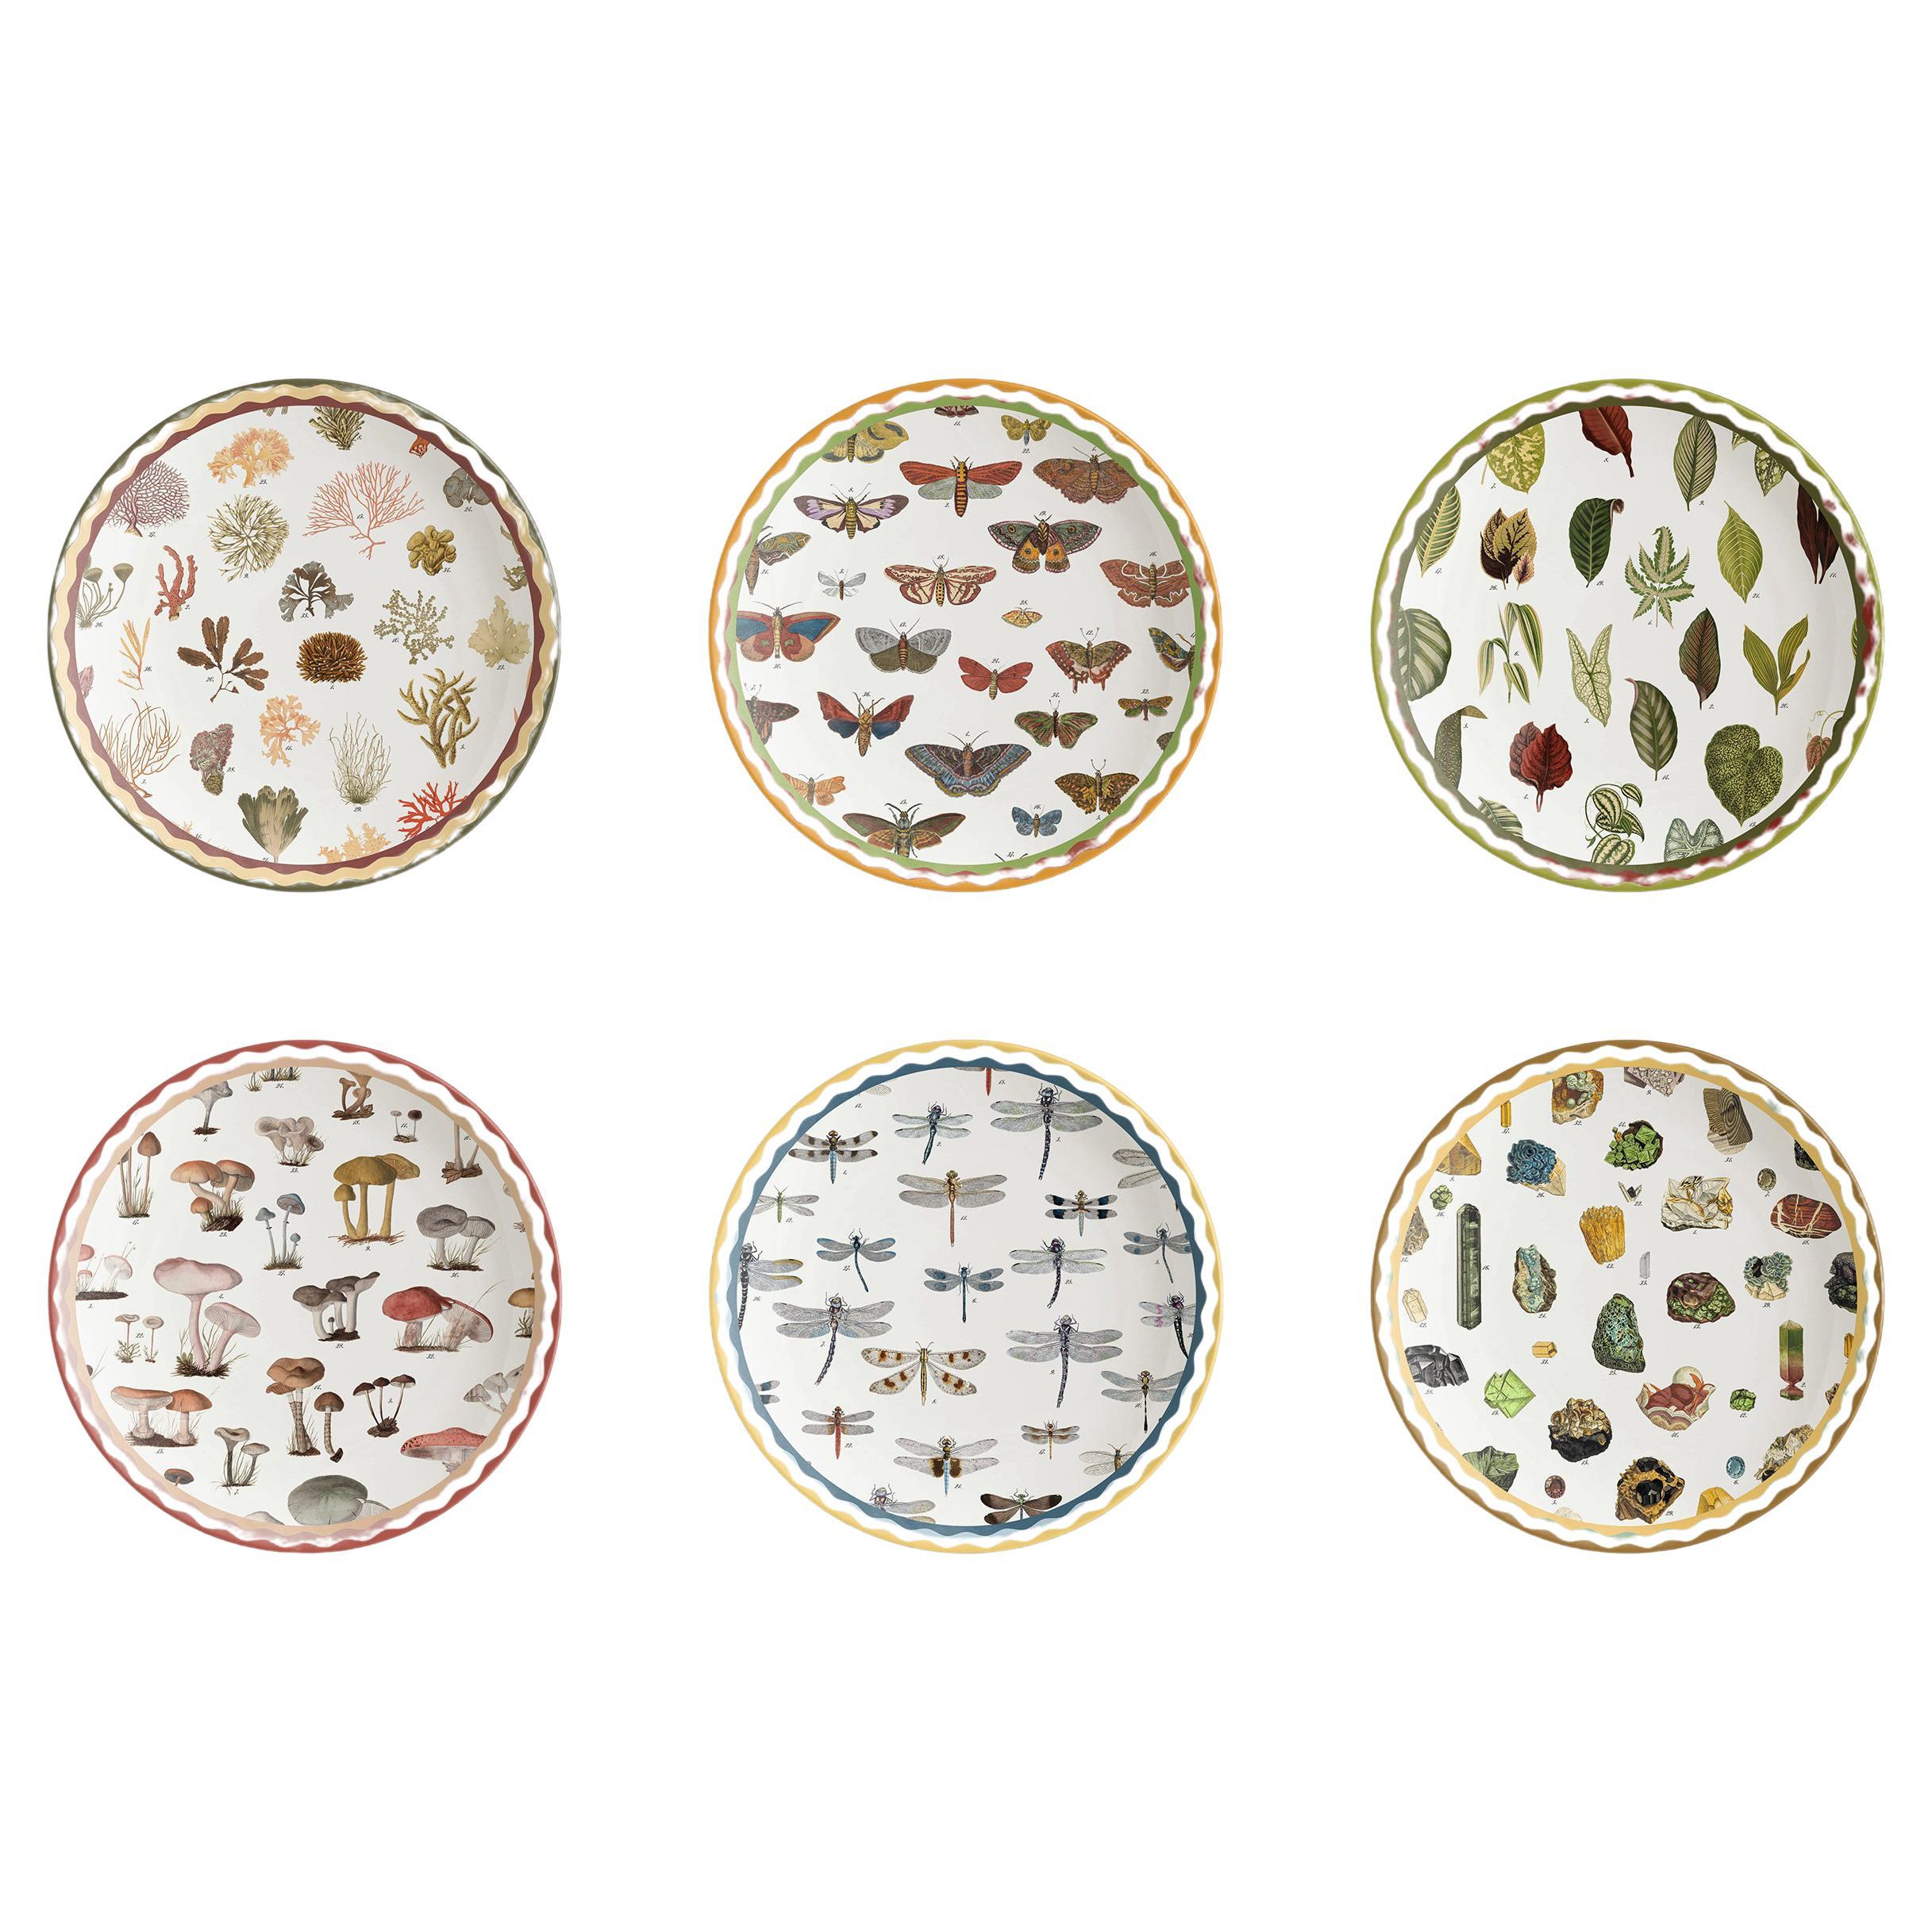 Cabinet de Curiosités, Six Contemporary Decorated Porcelain Dinner Plates